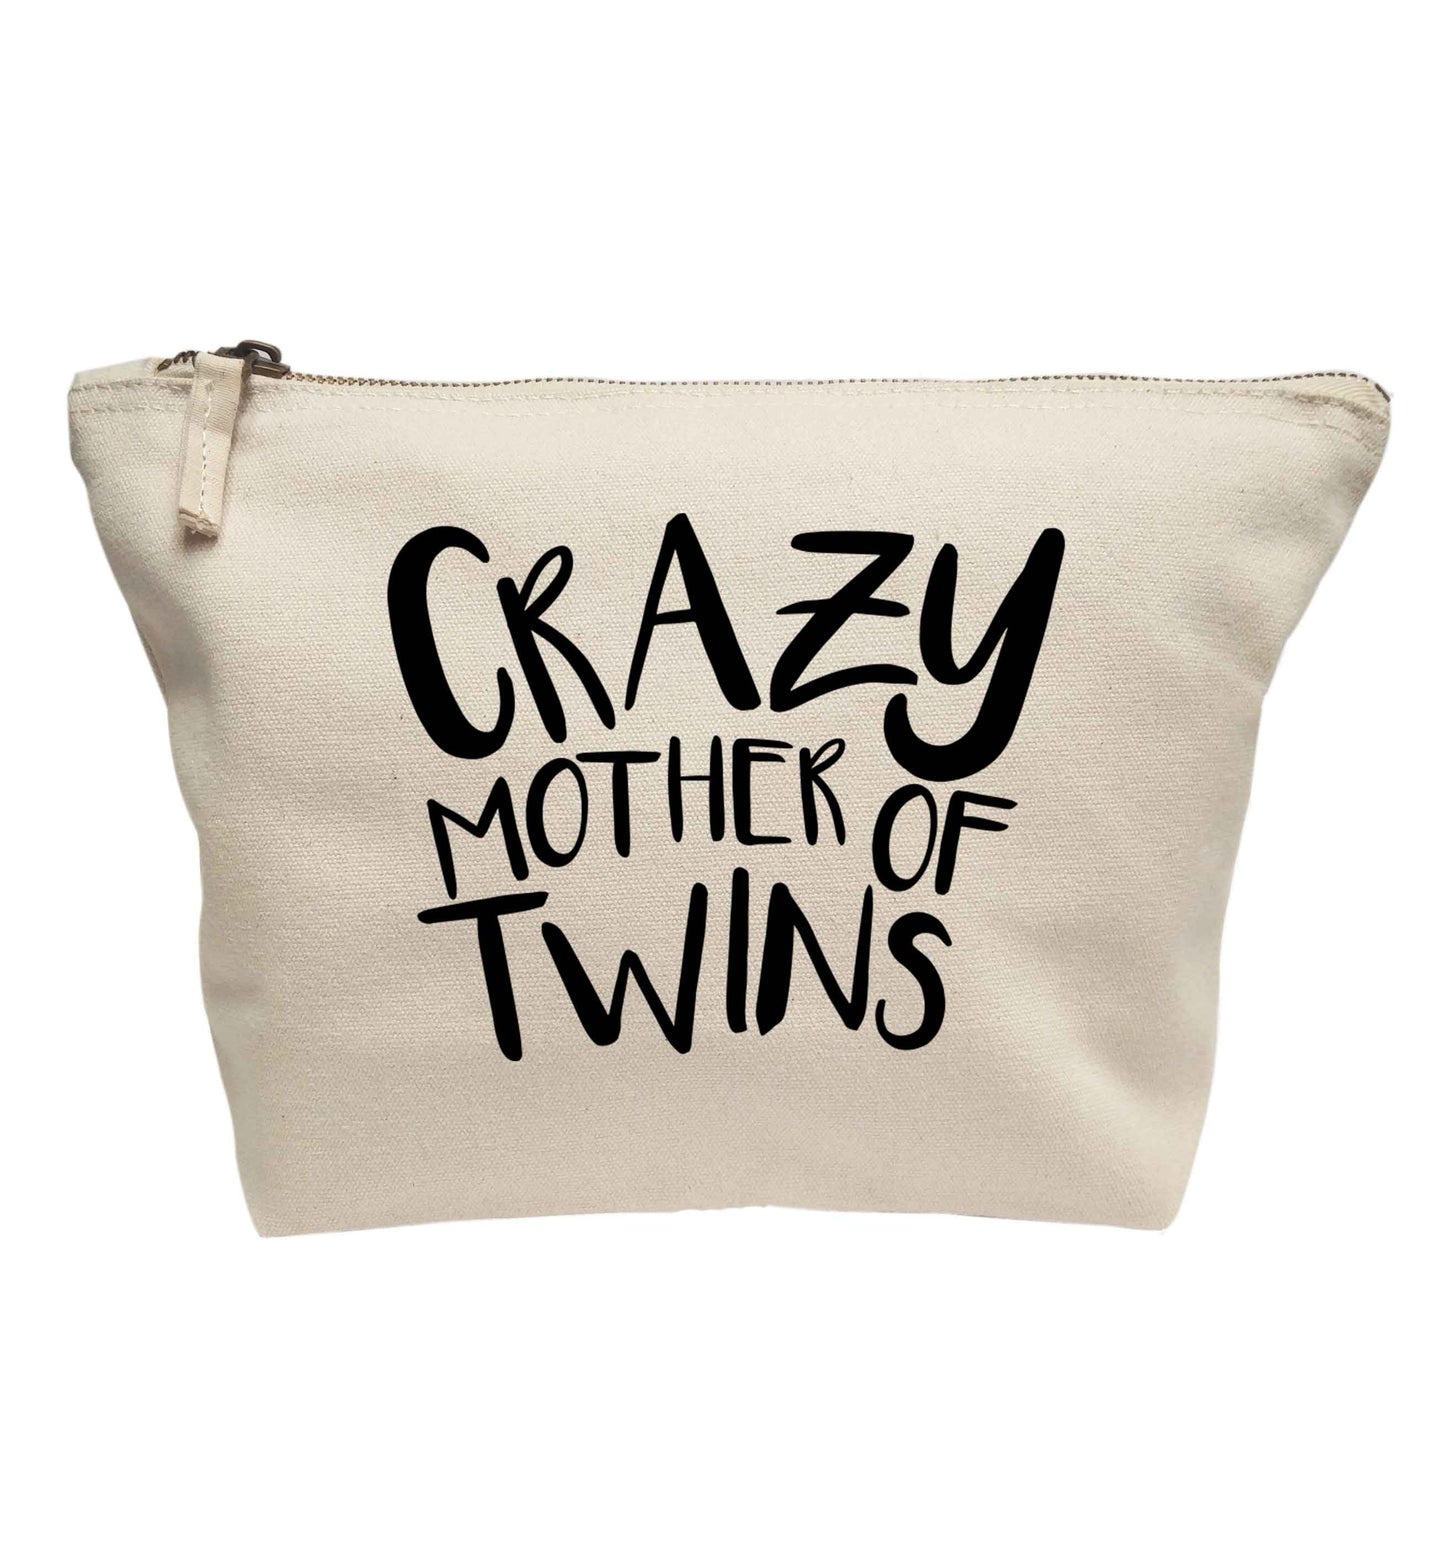 Crazy mother of twins | Makeup / wash bag